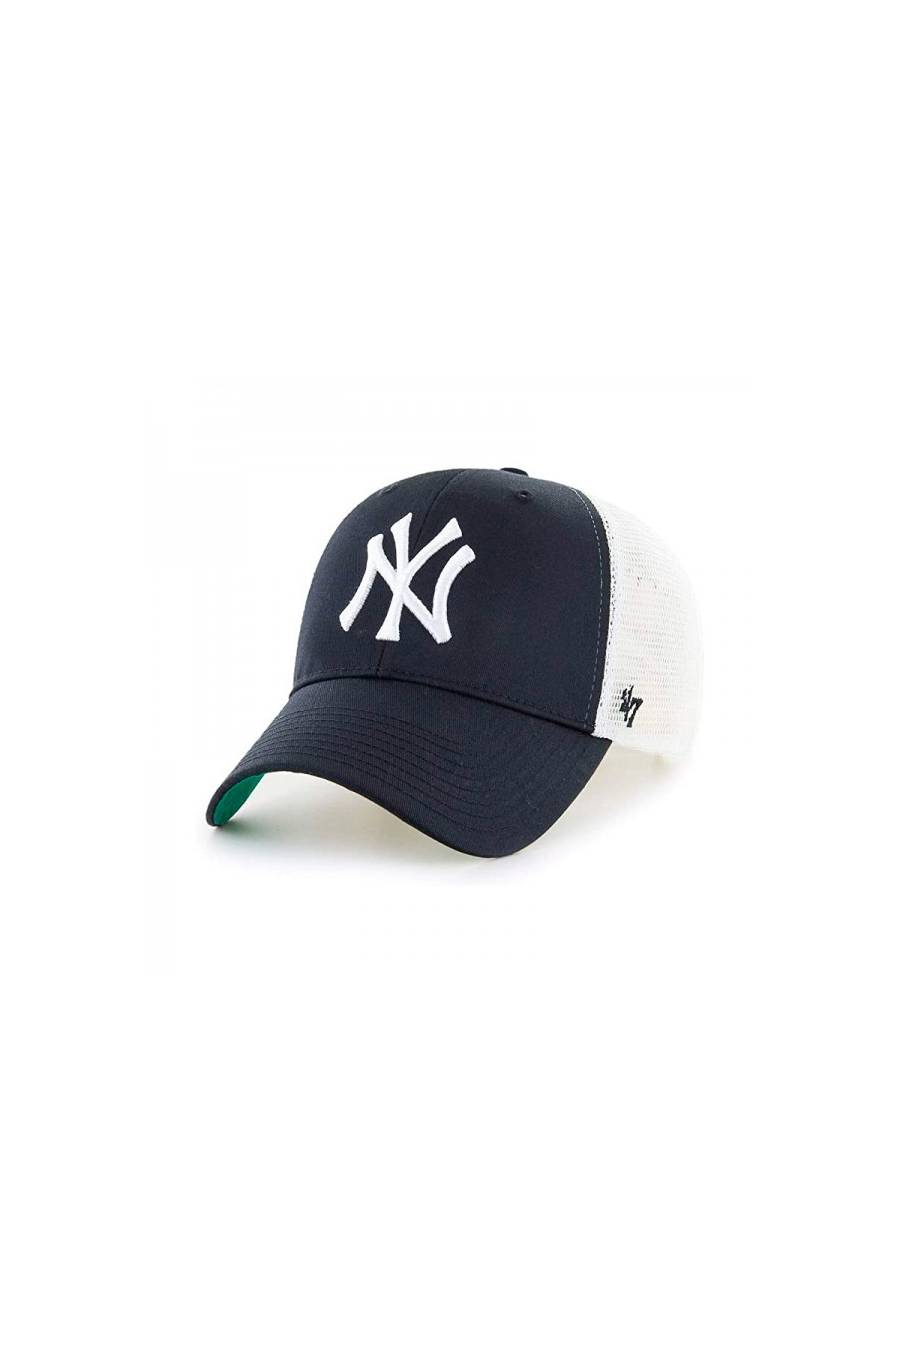 Gorra New York Yankees - masdeporte